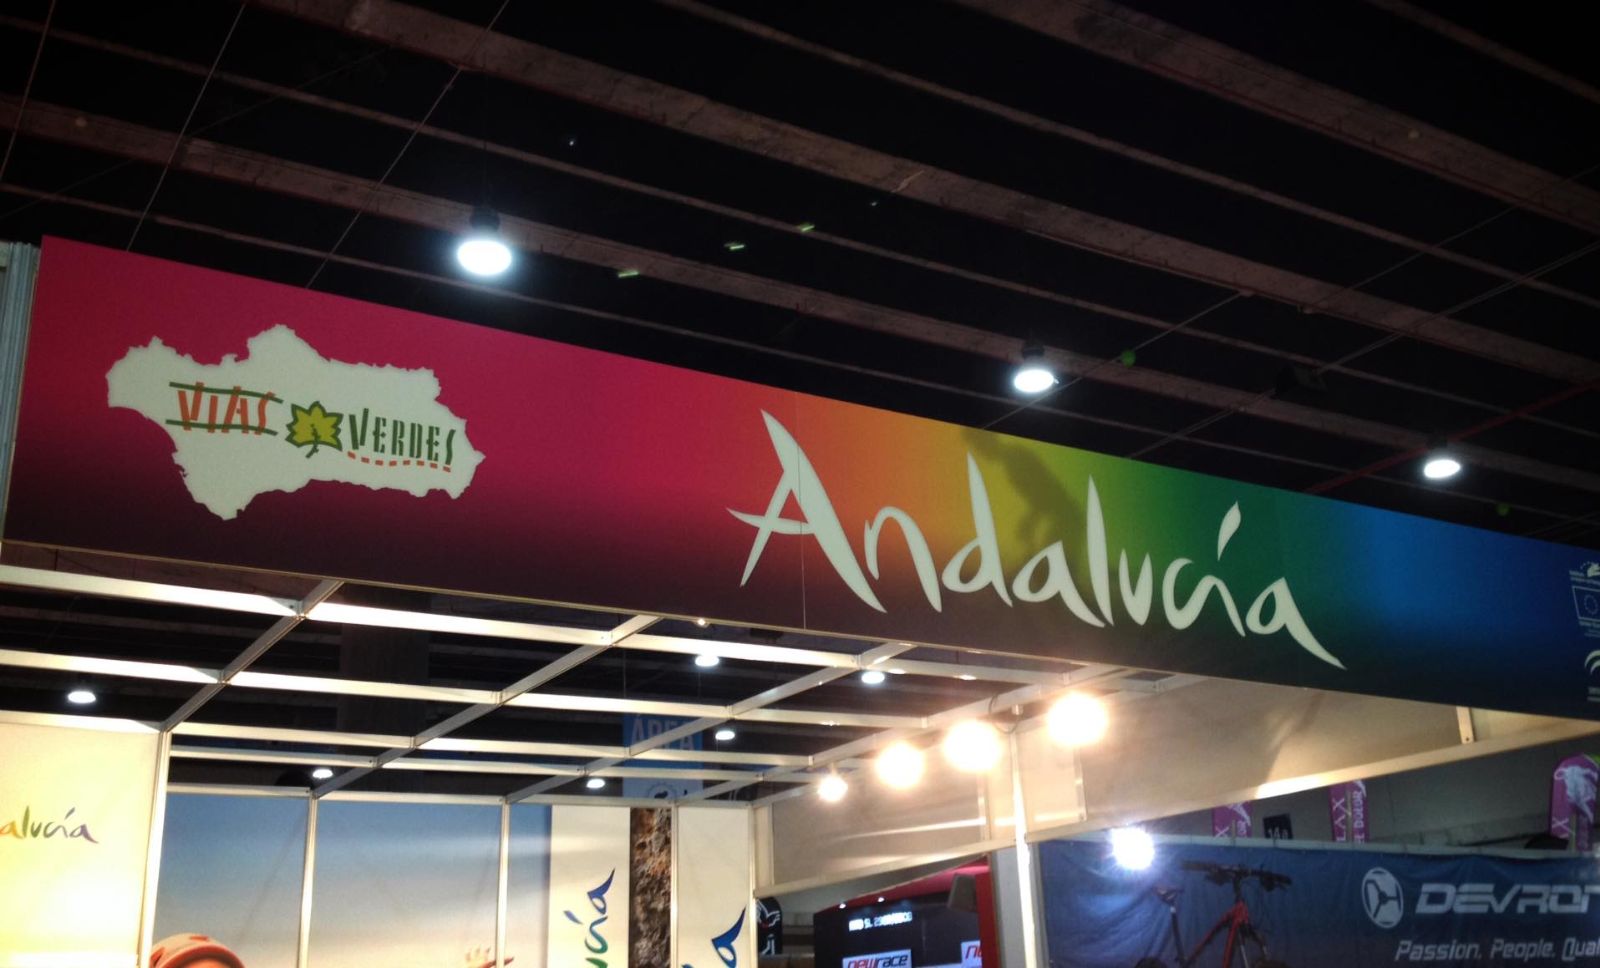 Vas Verdes de Andaluca